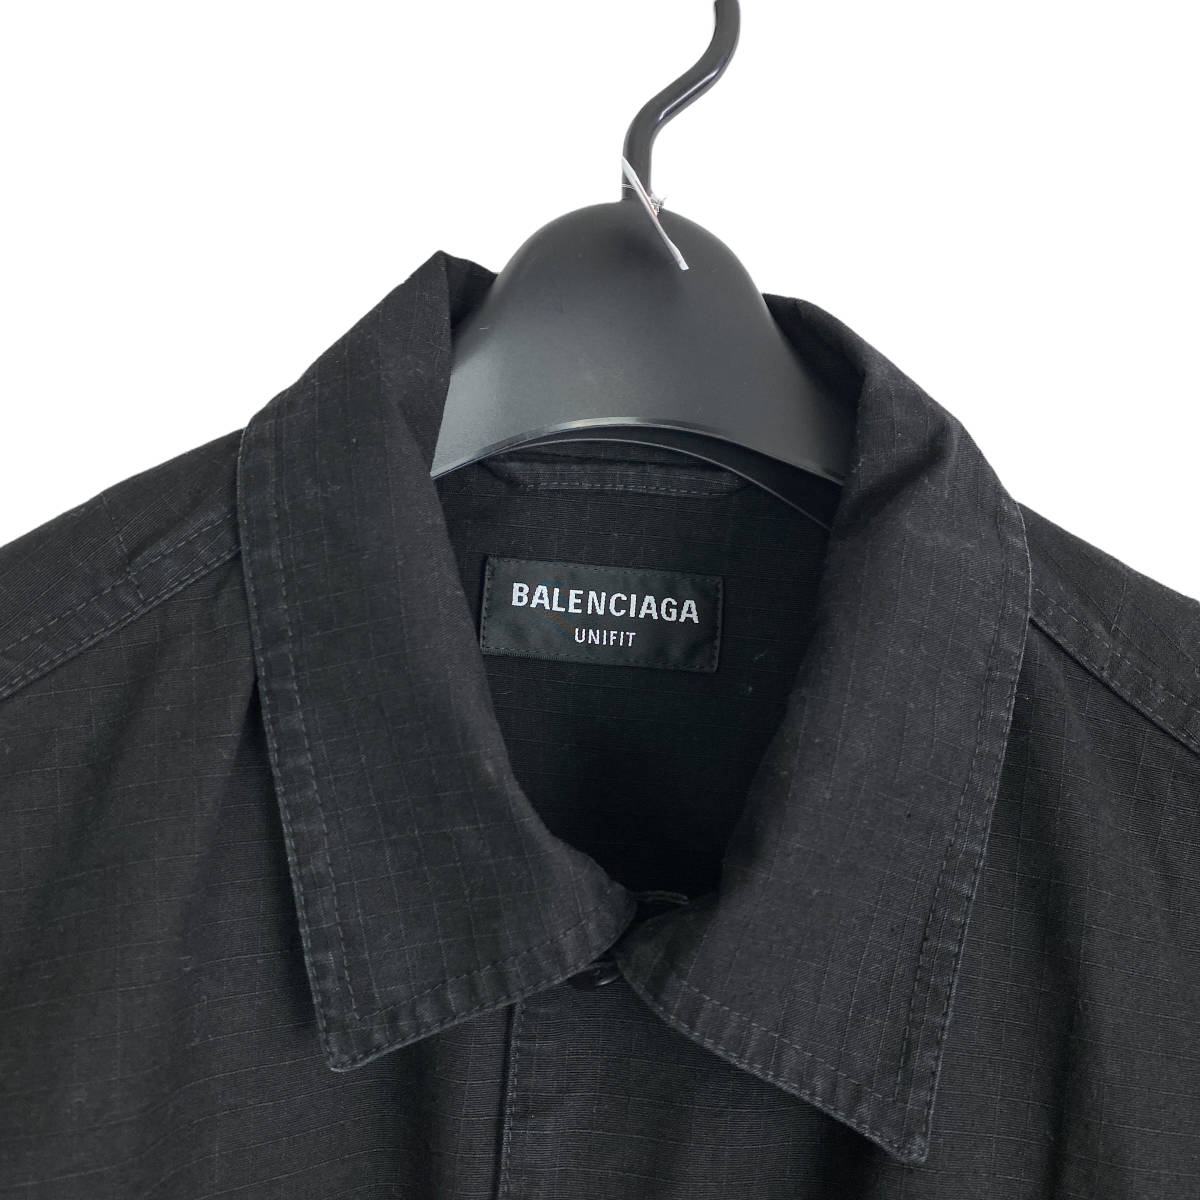 BALENCIAGA (バレンシアガ) military shirts jacket (black)｜Yahoo